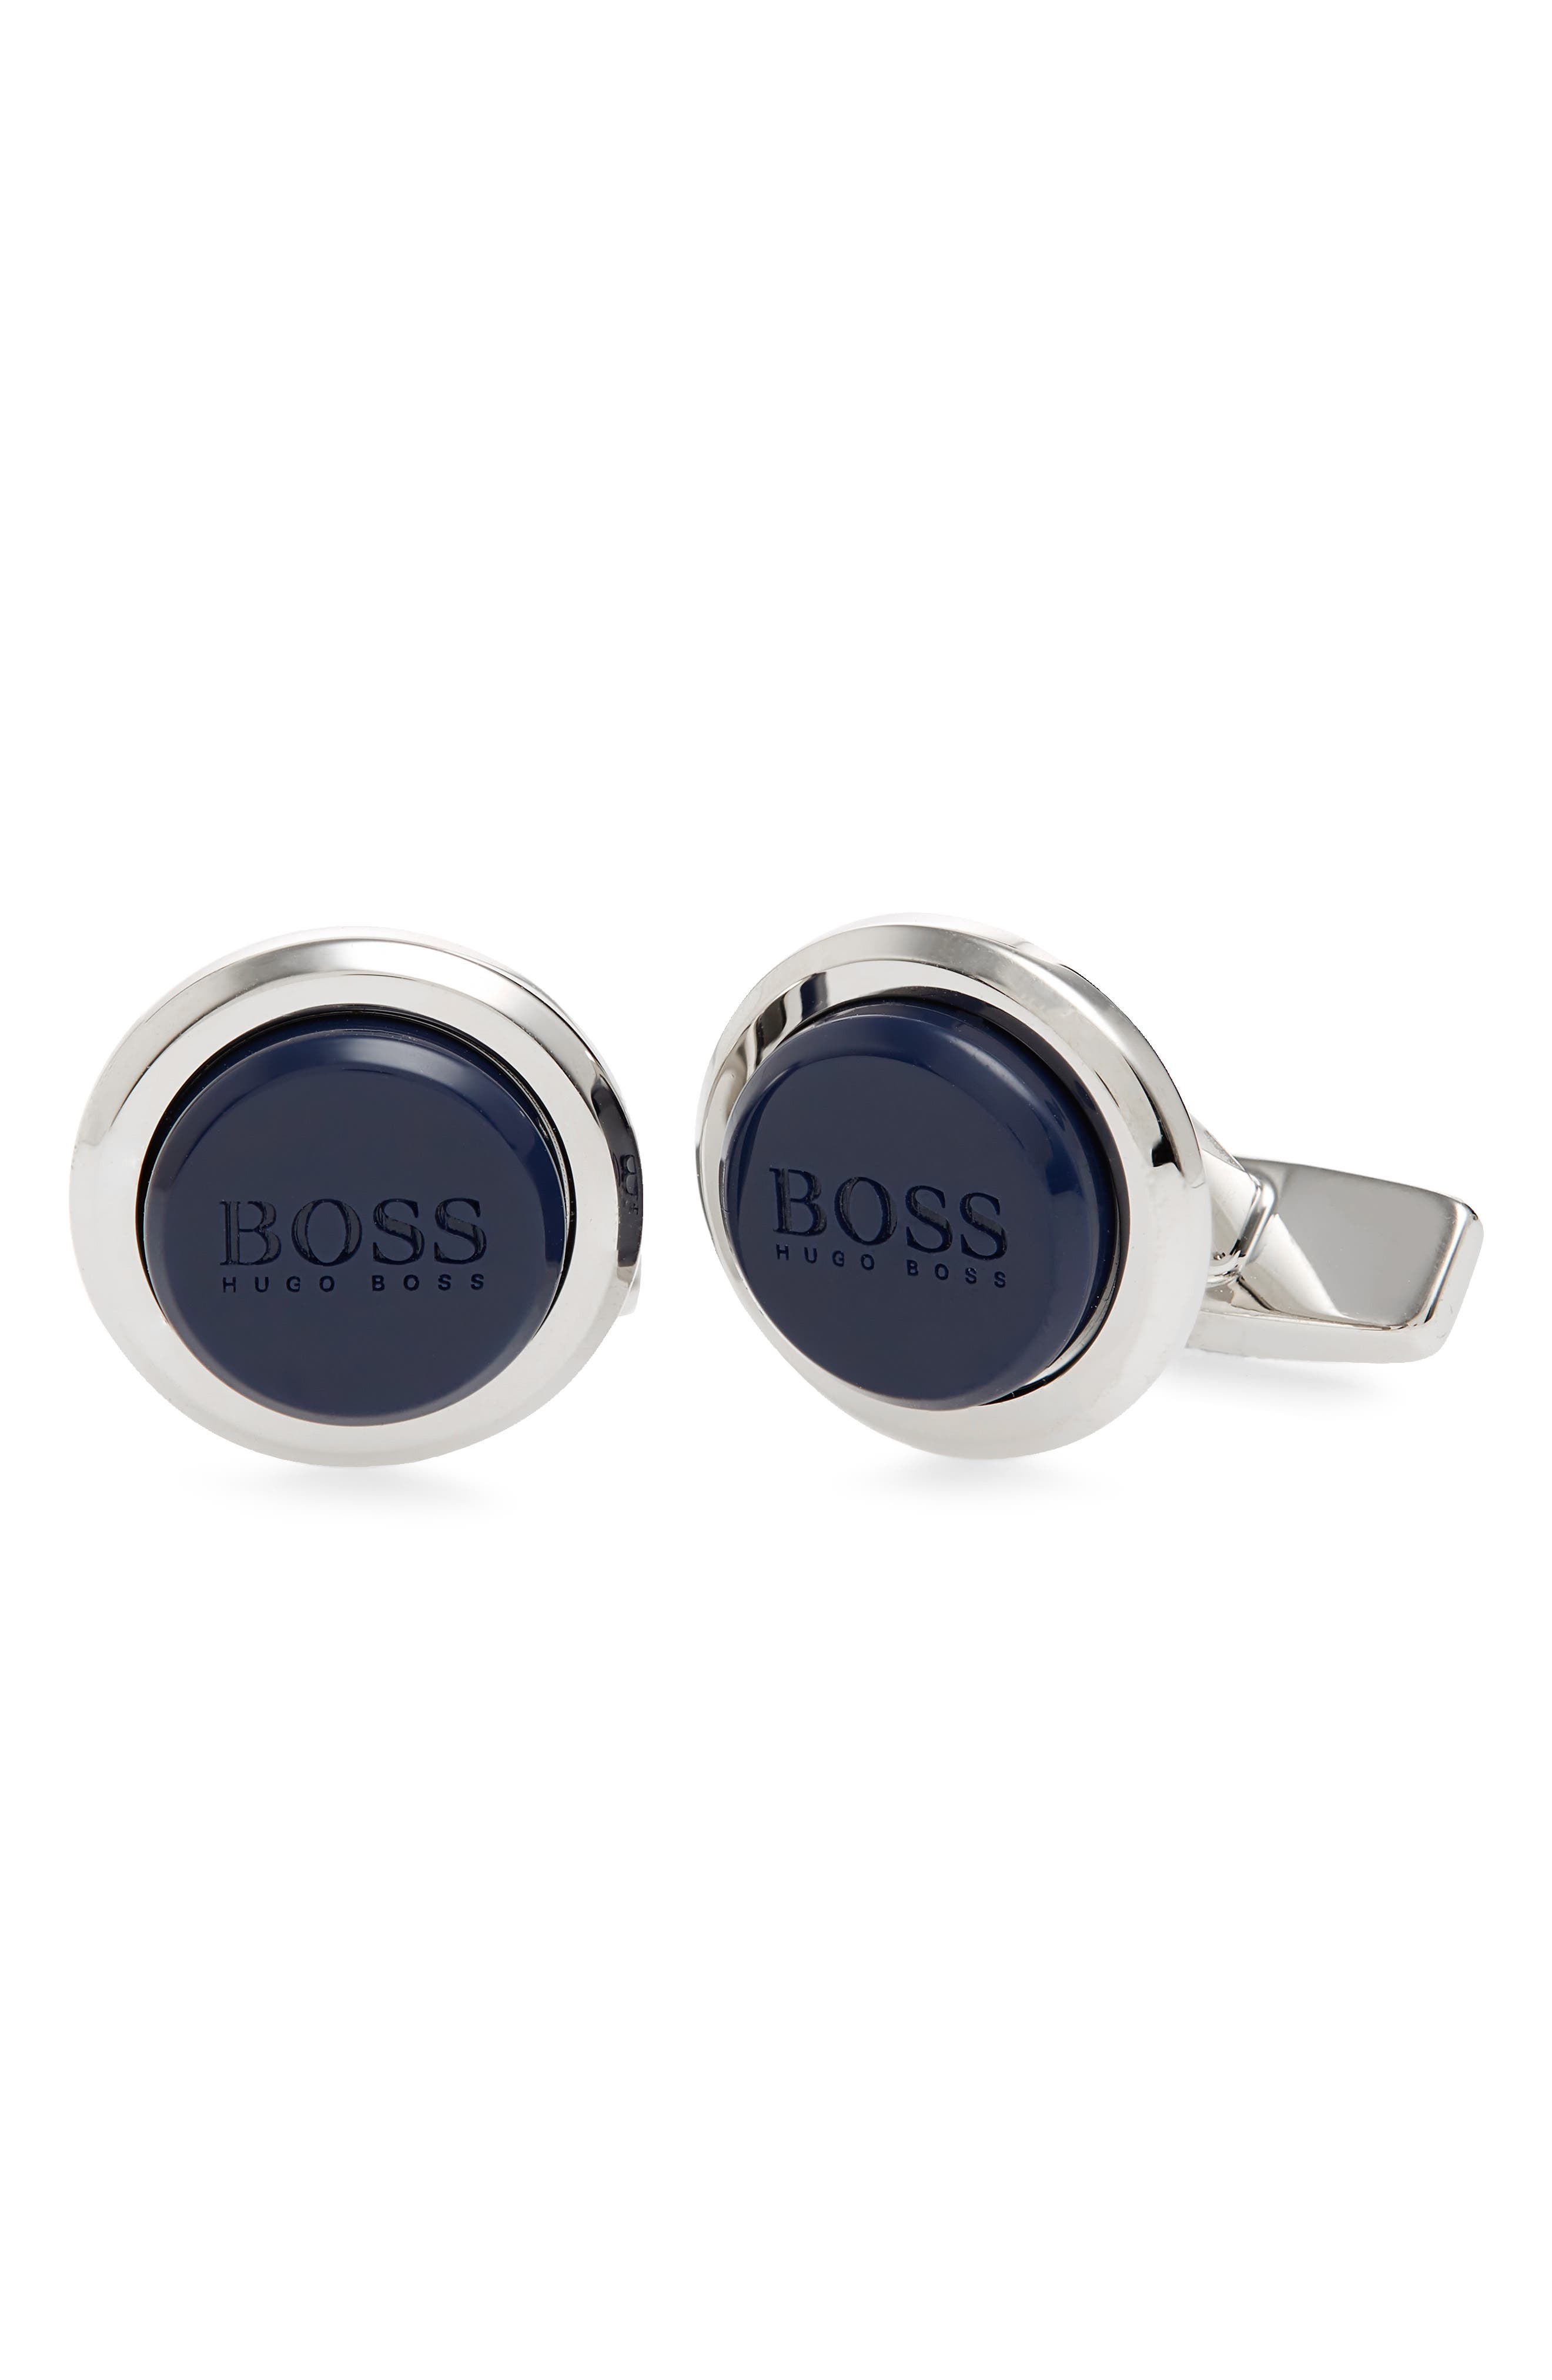 Purchase \u003e hugo boss cufflinks canada 